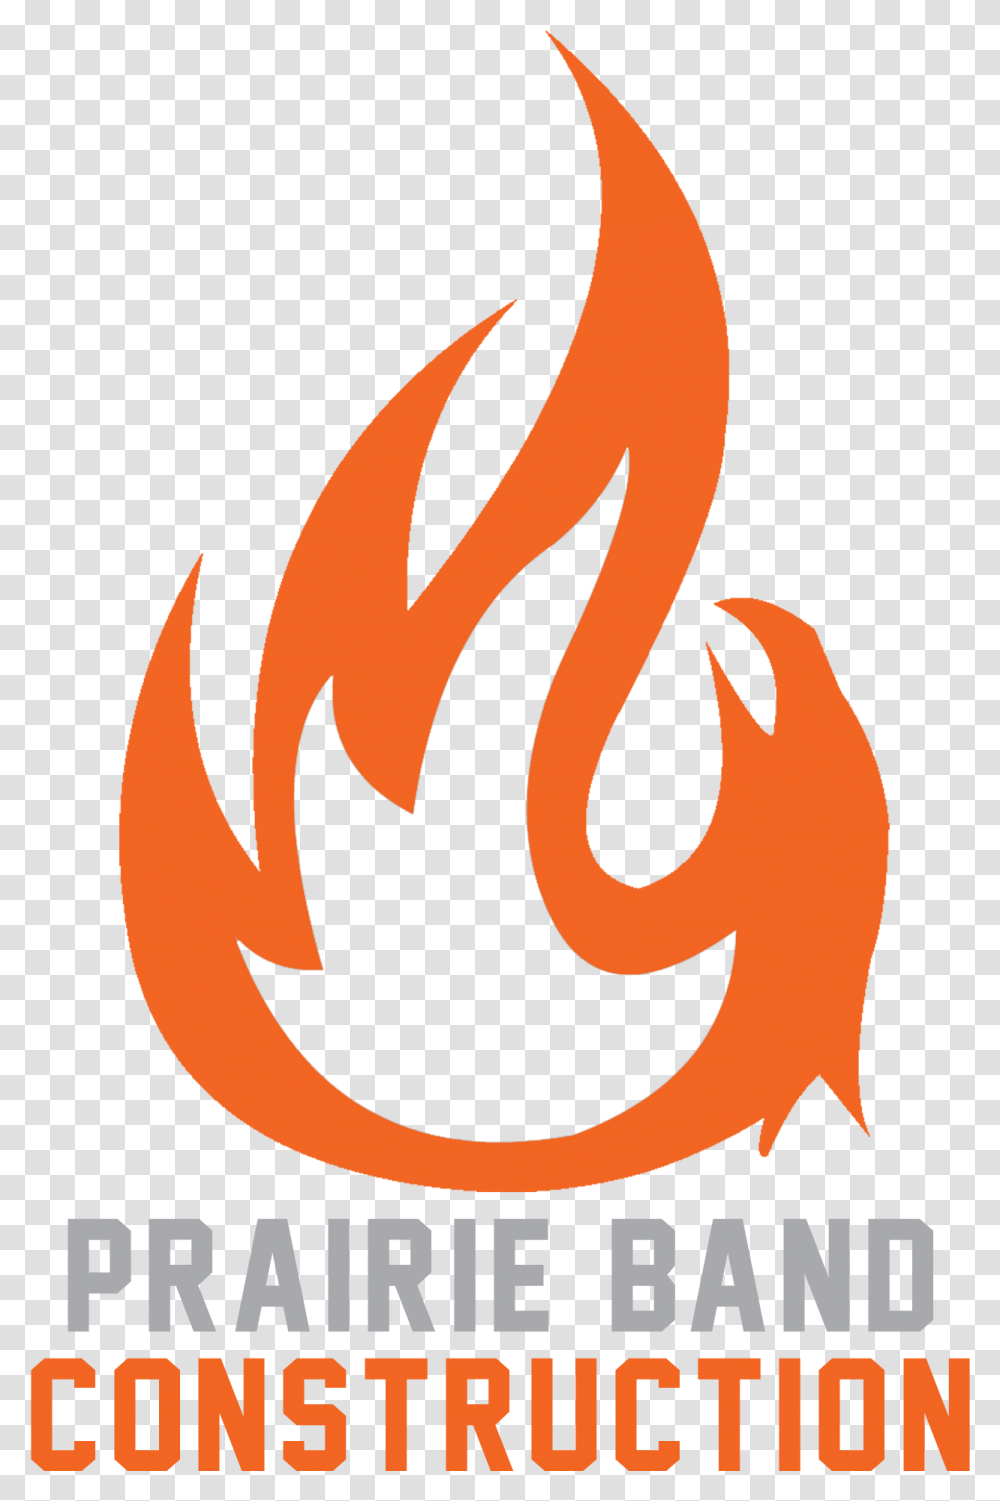 Prairie Band Construction Logo Graphic Design, Poster, Advertisement, Label Transparent Png